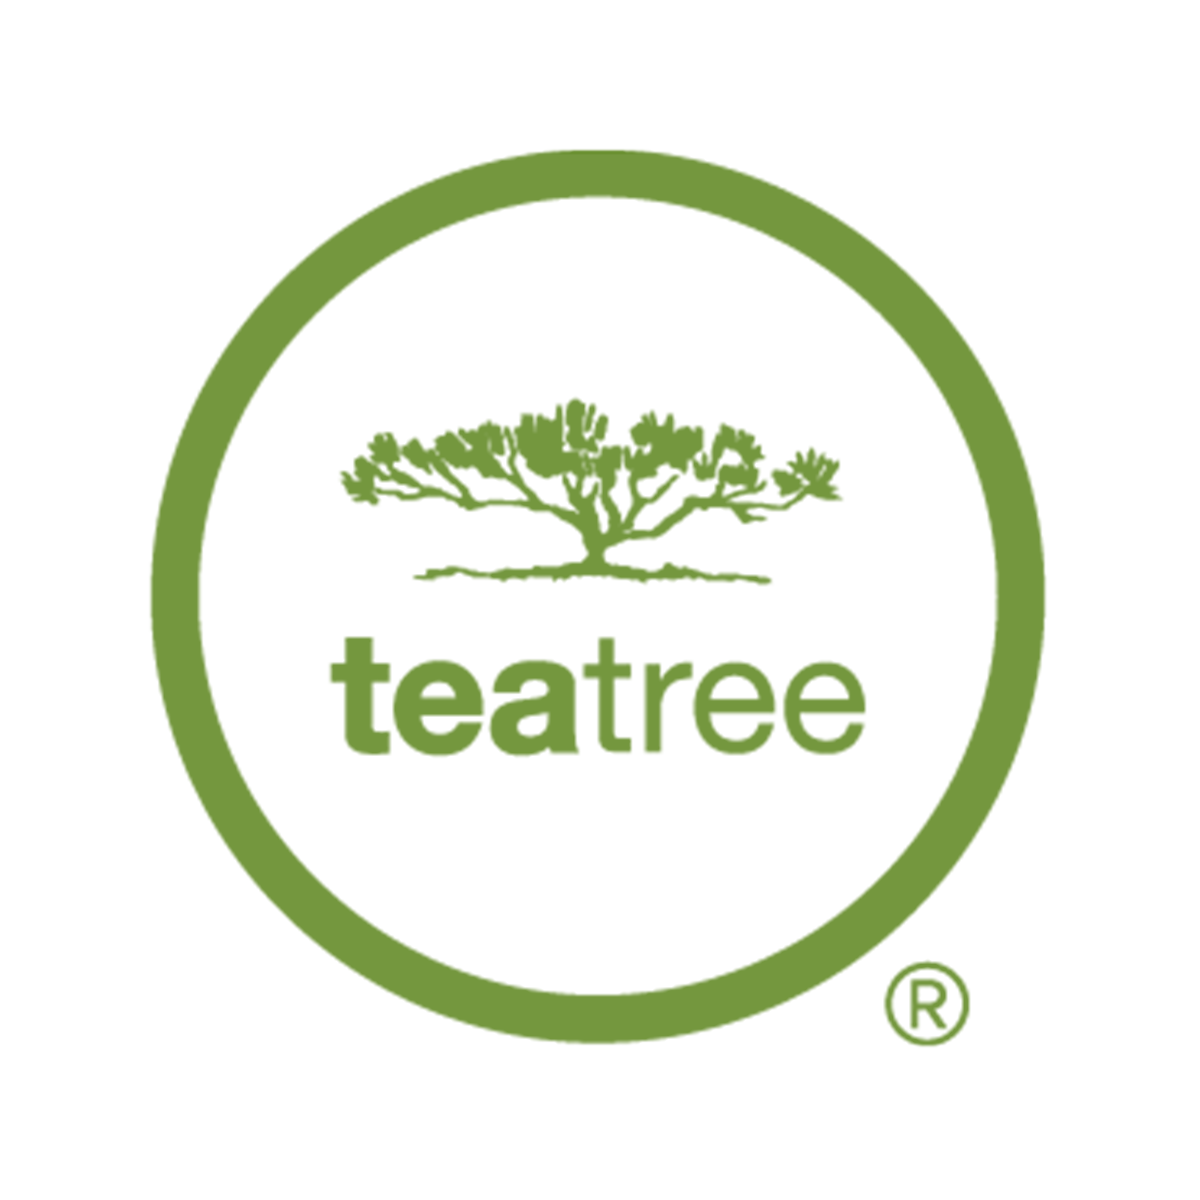 Paul Mitchell Teatree Logo